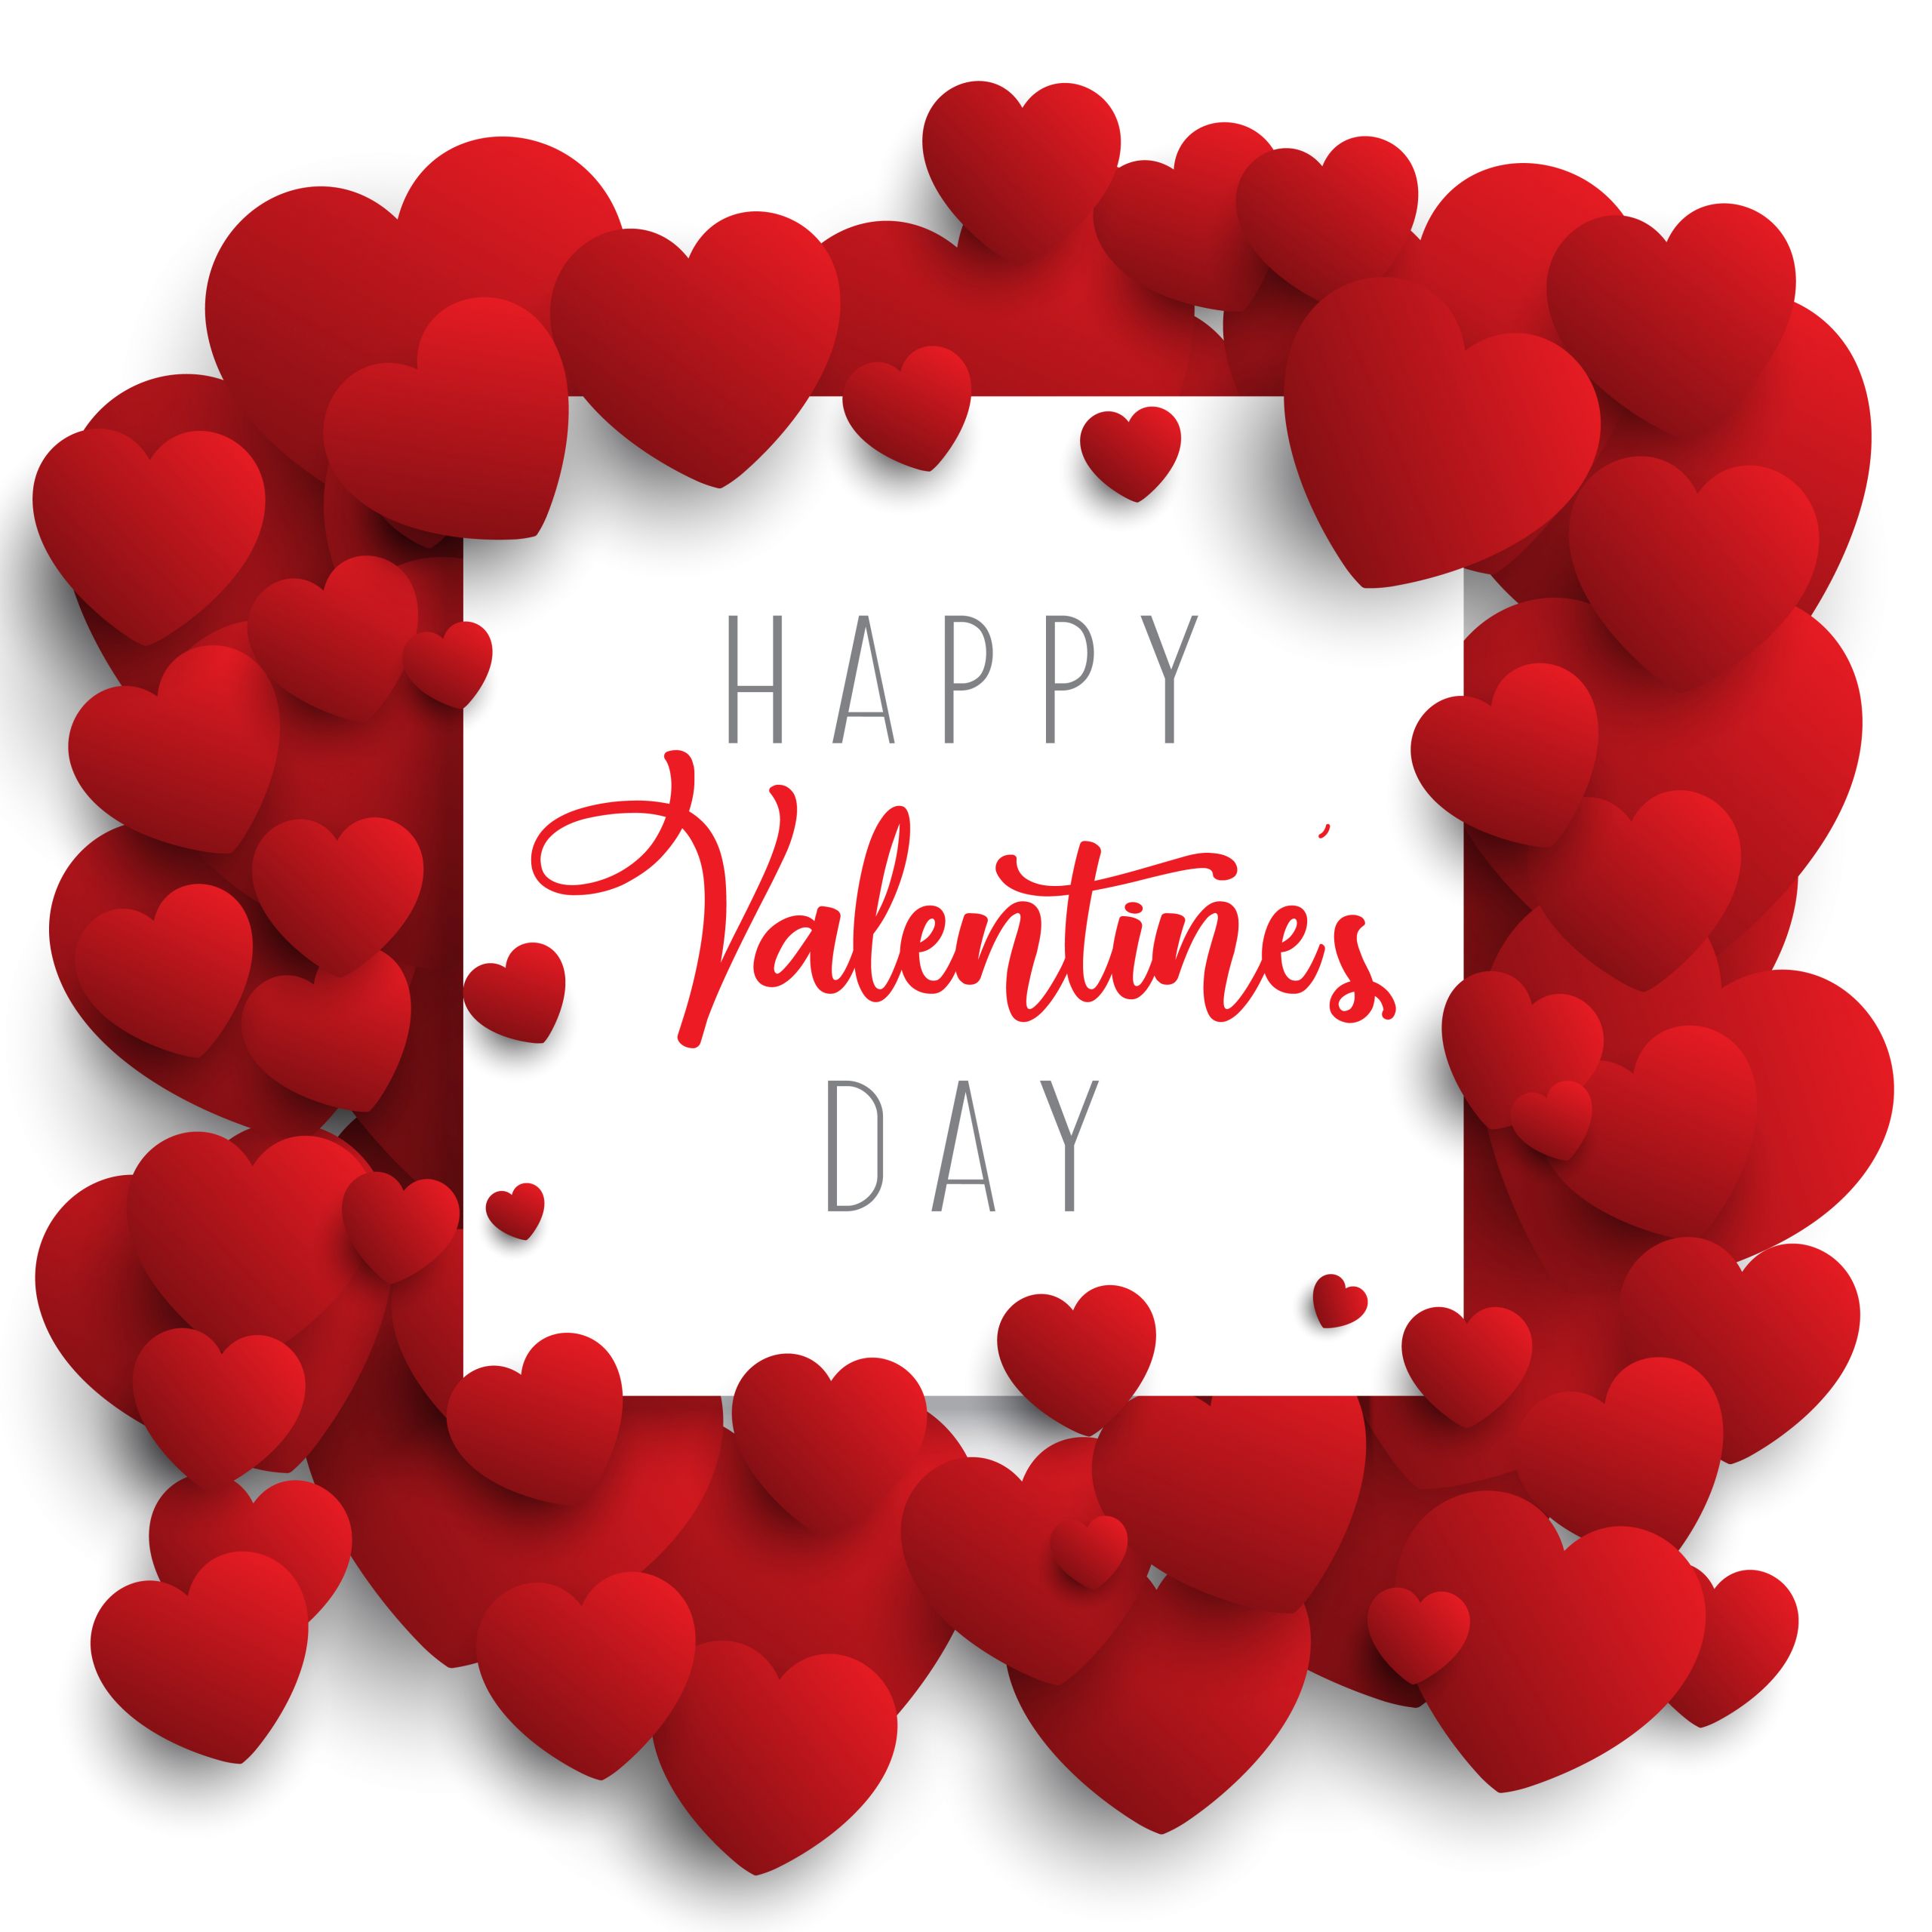 Valentines Day Design
 Valentine s Day background with hearts design Download